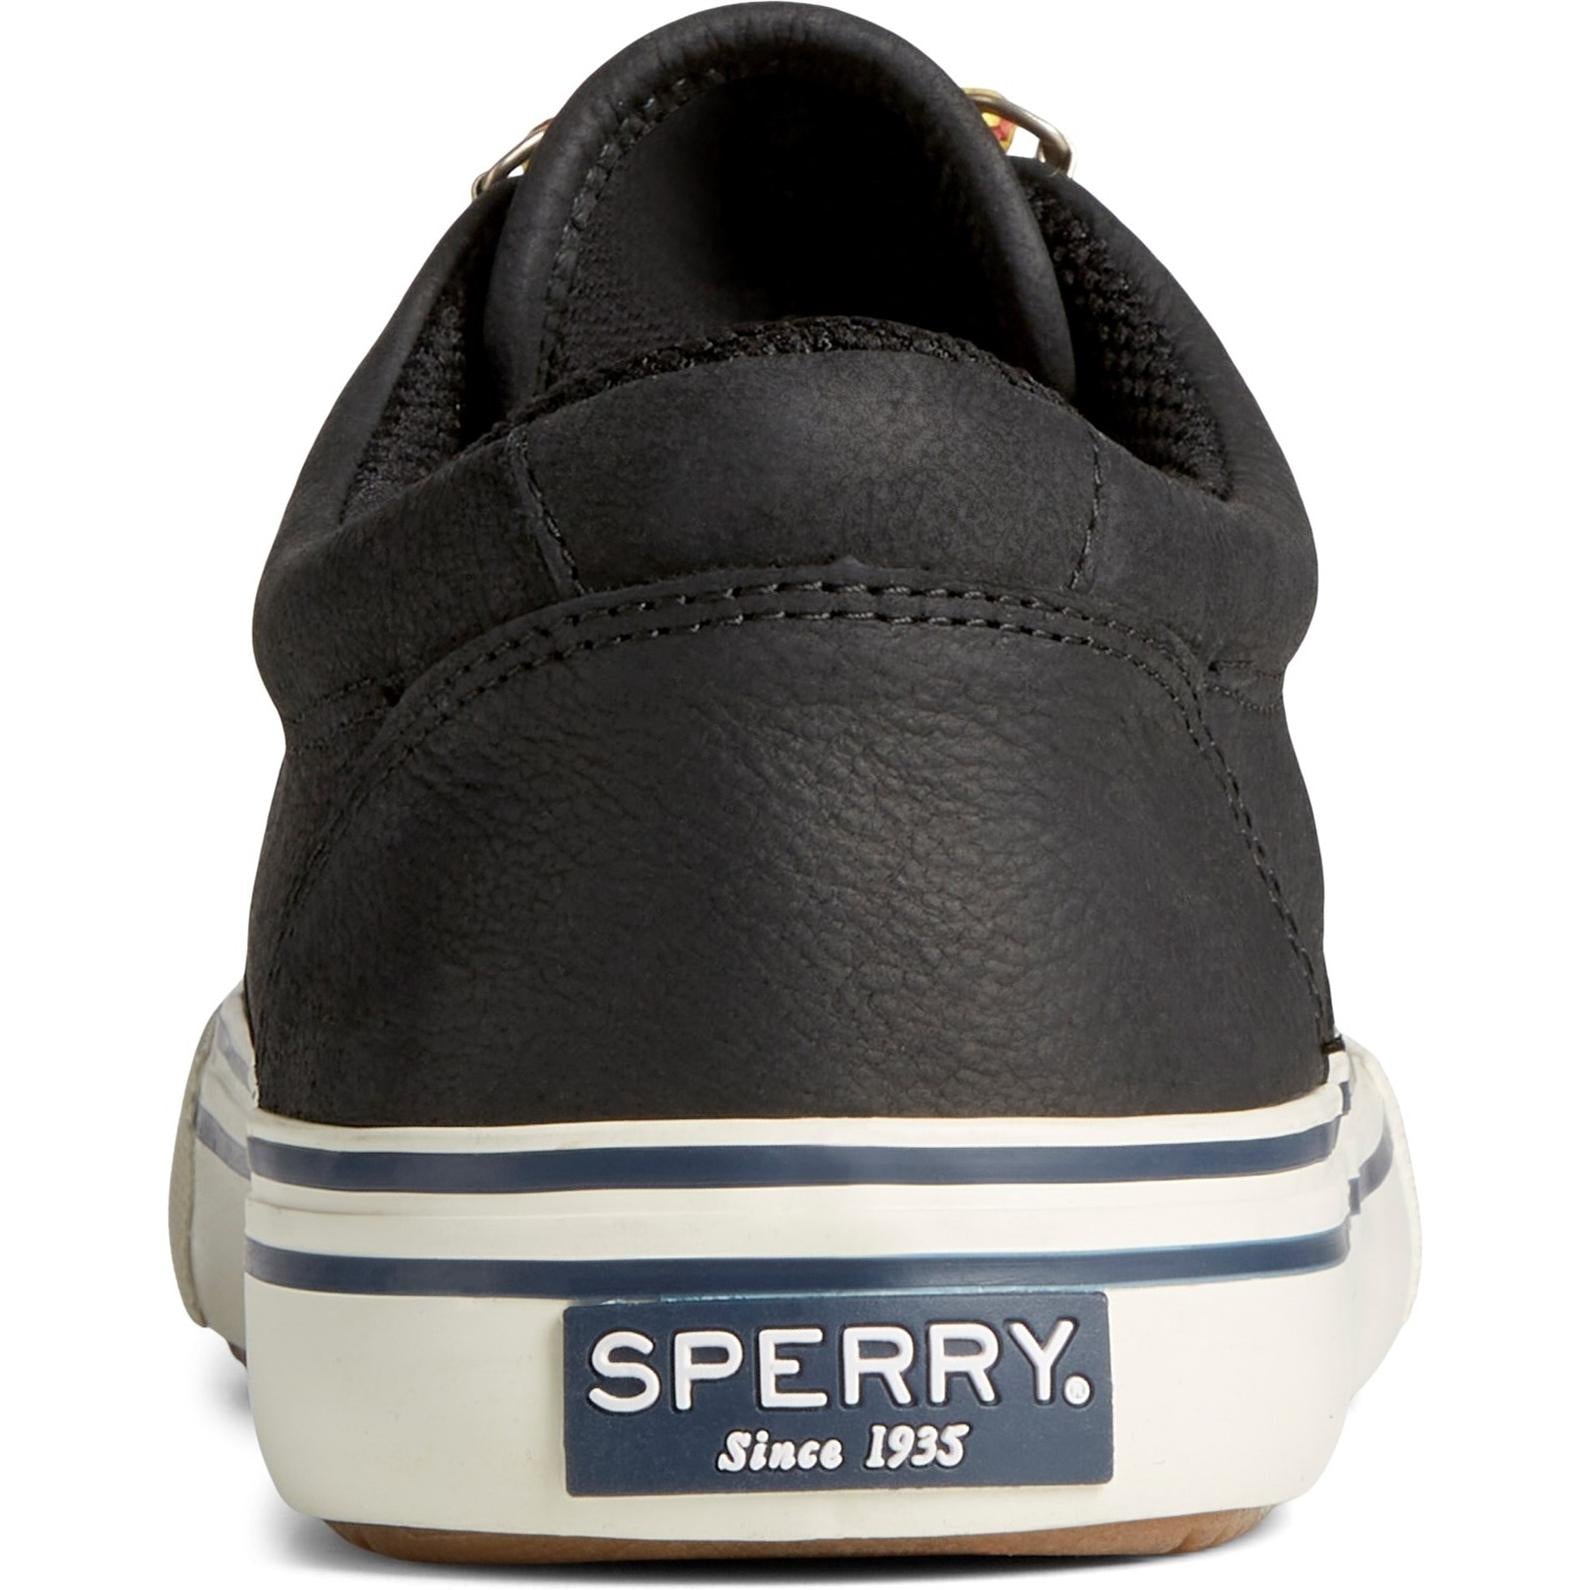 Sperry Top-sider Striper Storm CVO WP Shoe